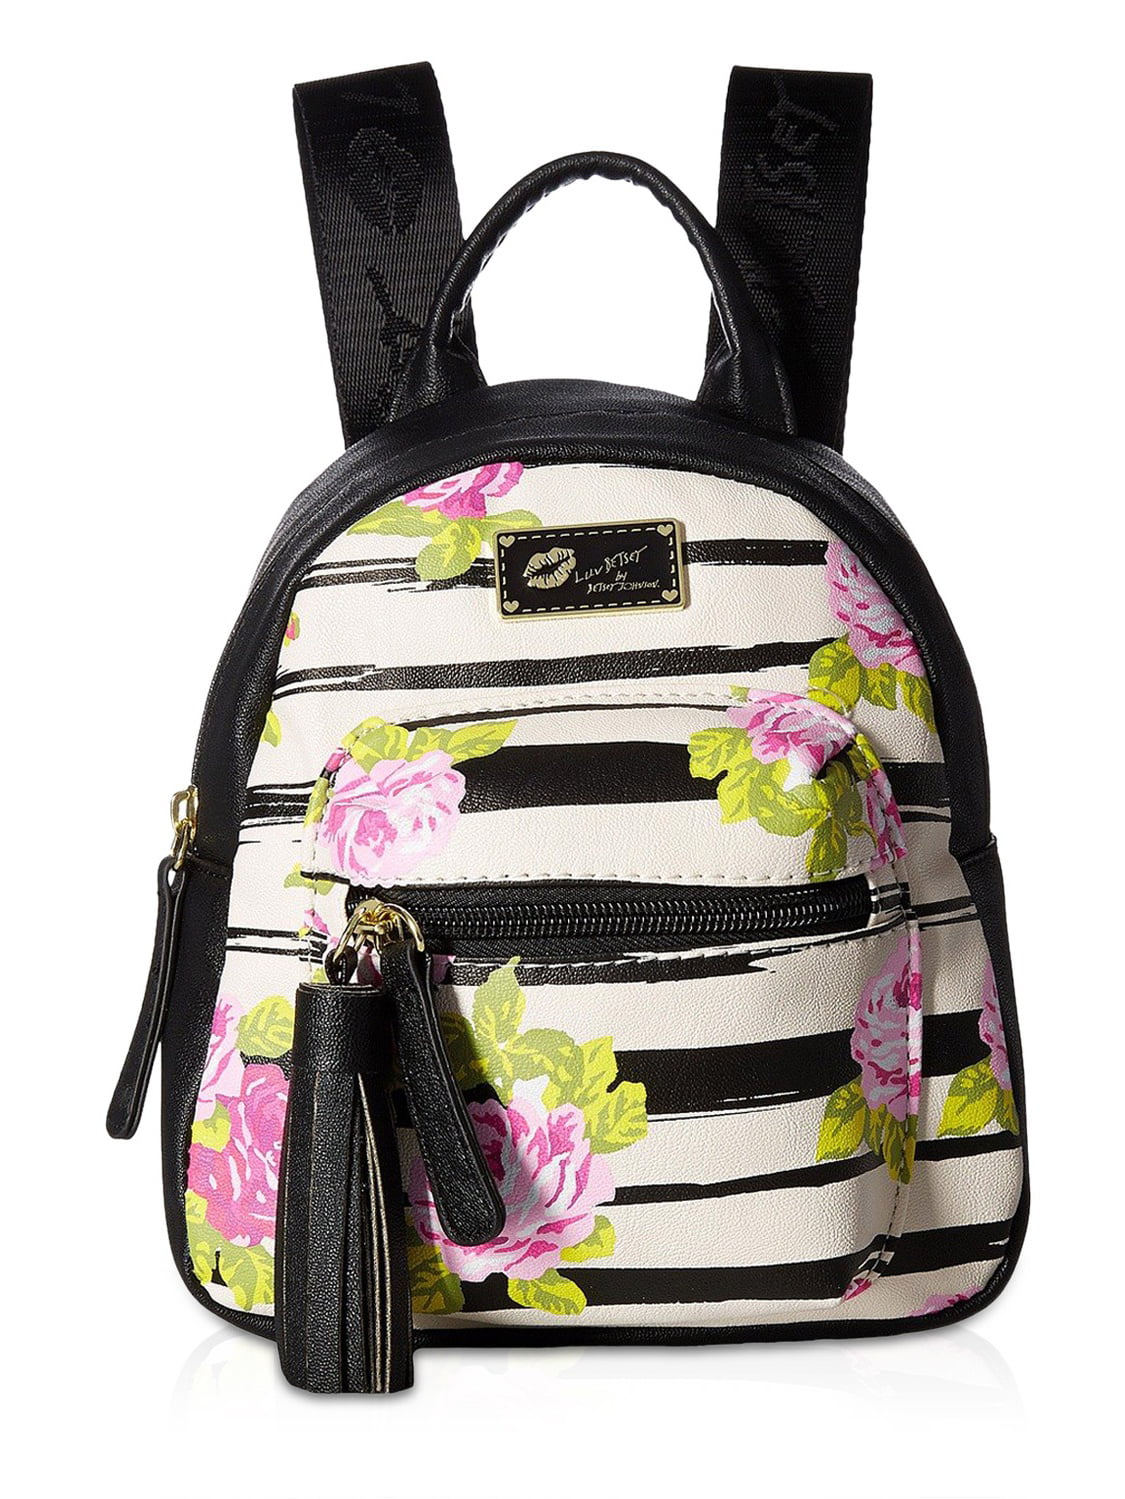 Luv Betsey Luv Betsey Johnson Ador Mini Small Travel Luggage Backpacks Purse Bookbag Tote Bag Rose Bud Walmart Com Walmart Com